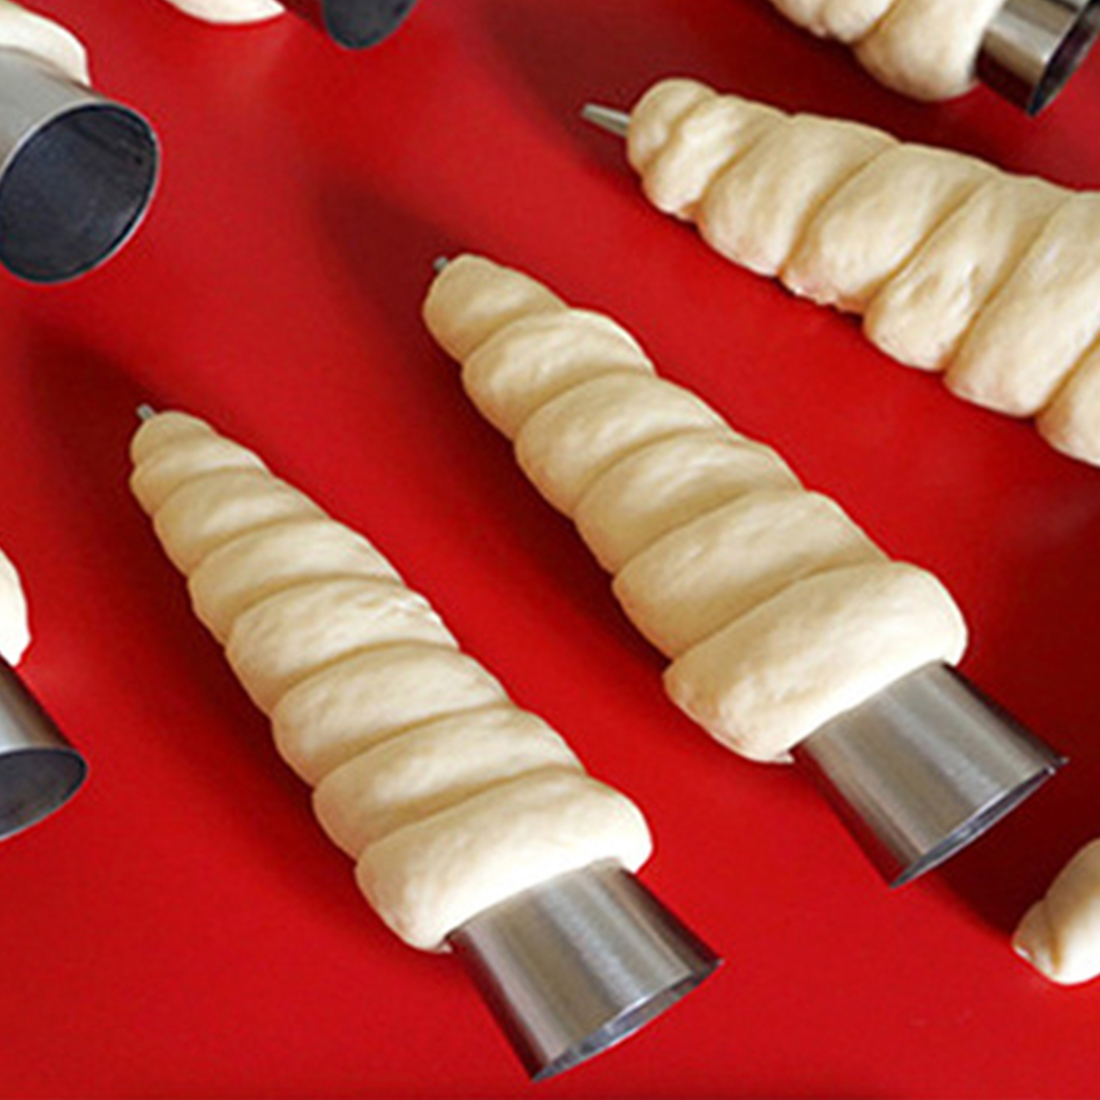 https://alitools.io/en/showcase/image?url=https%3A%2F%2Fae01.alicdn.com%2Fkf%2FHTB1I97Tl8DH8KJjy1zeq6xjepXap%2FNewest-5pcs-lot-Baking-Cones-Stainless-Steel-Spiral-Croissant-Tubes-Horn-bread-Pastry-making-Cake-Mold.jpg